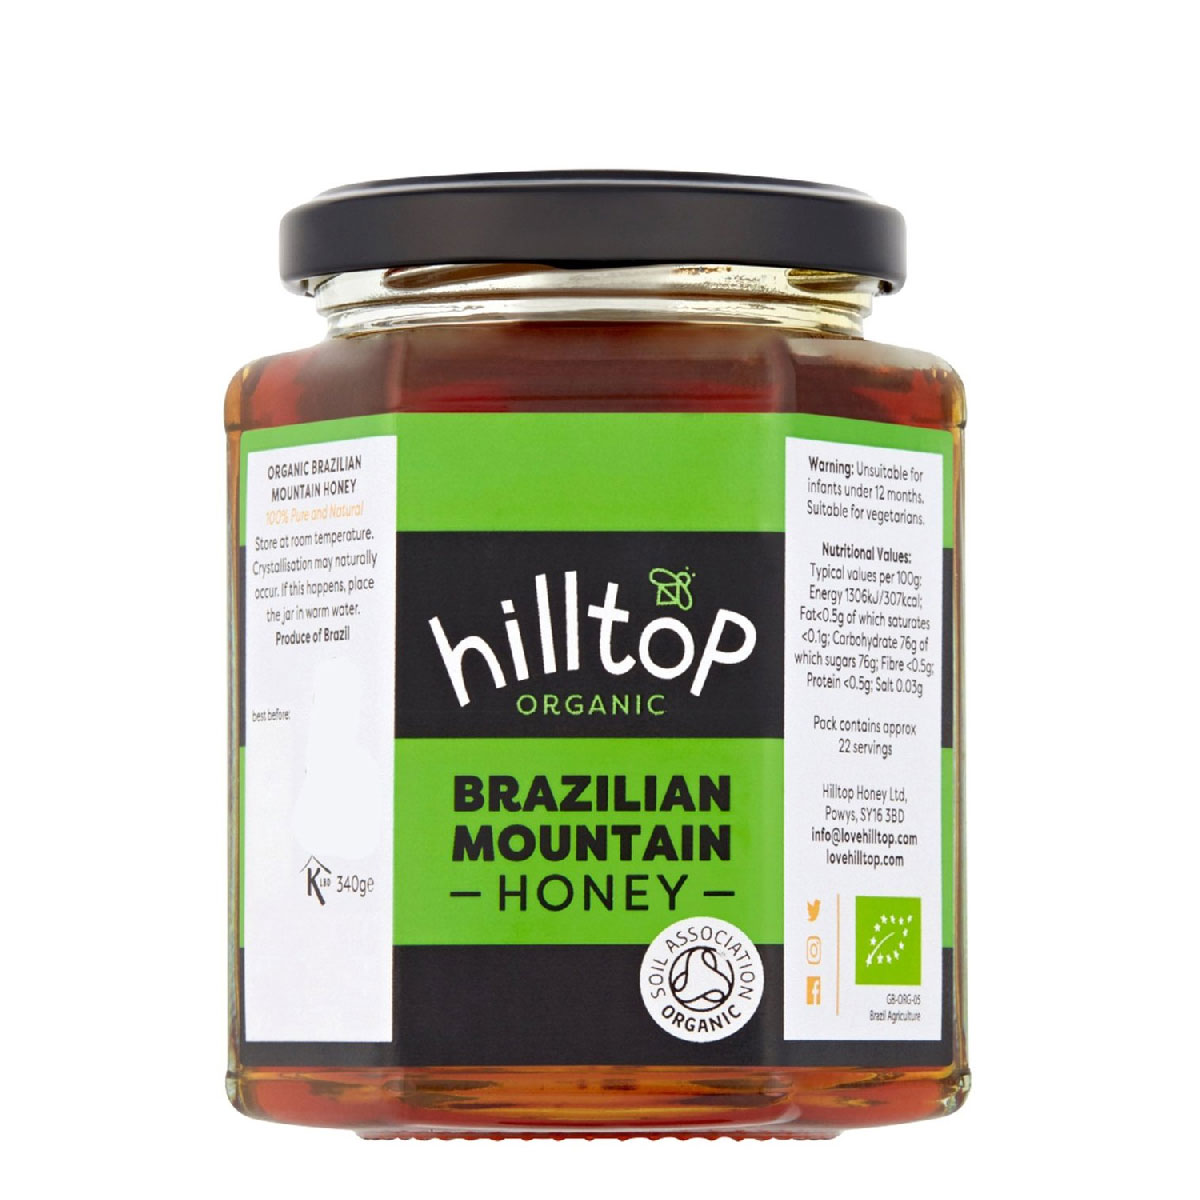 Hilltop Organic Brazilian Mountain Honey 340g